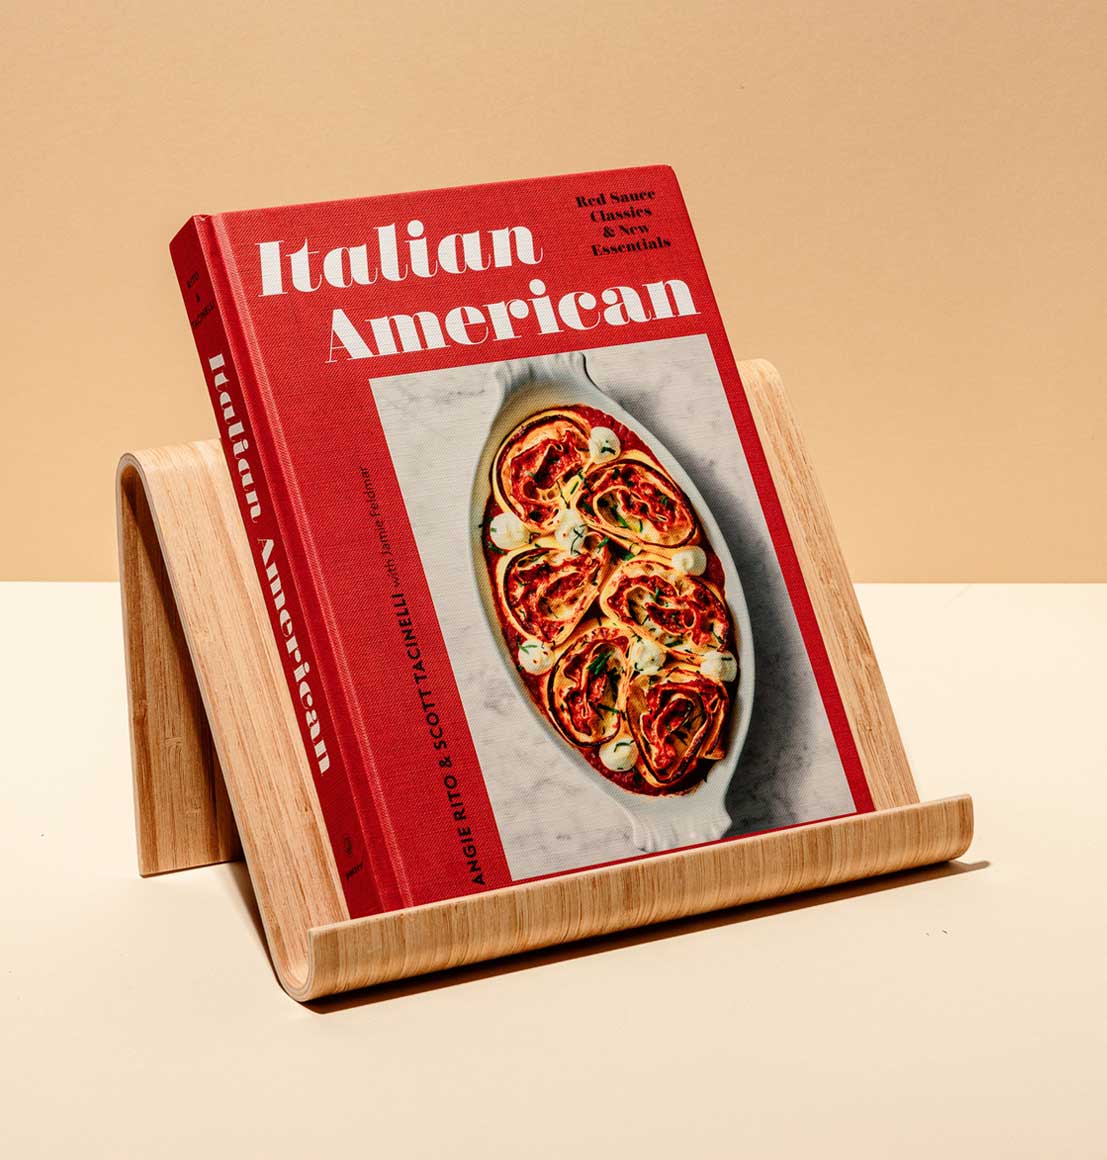 Italian American